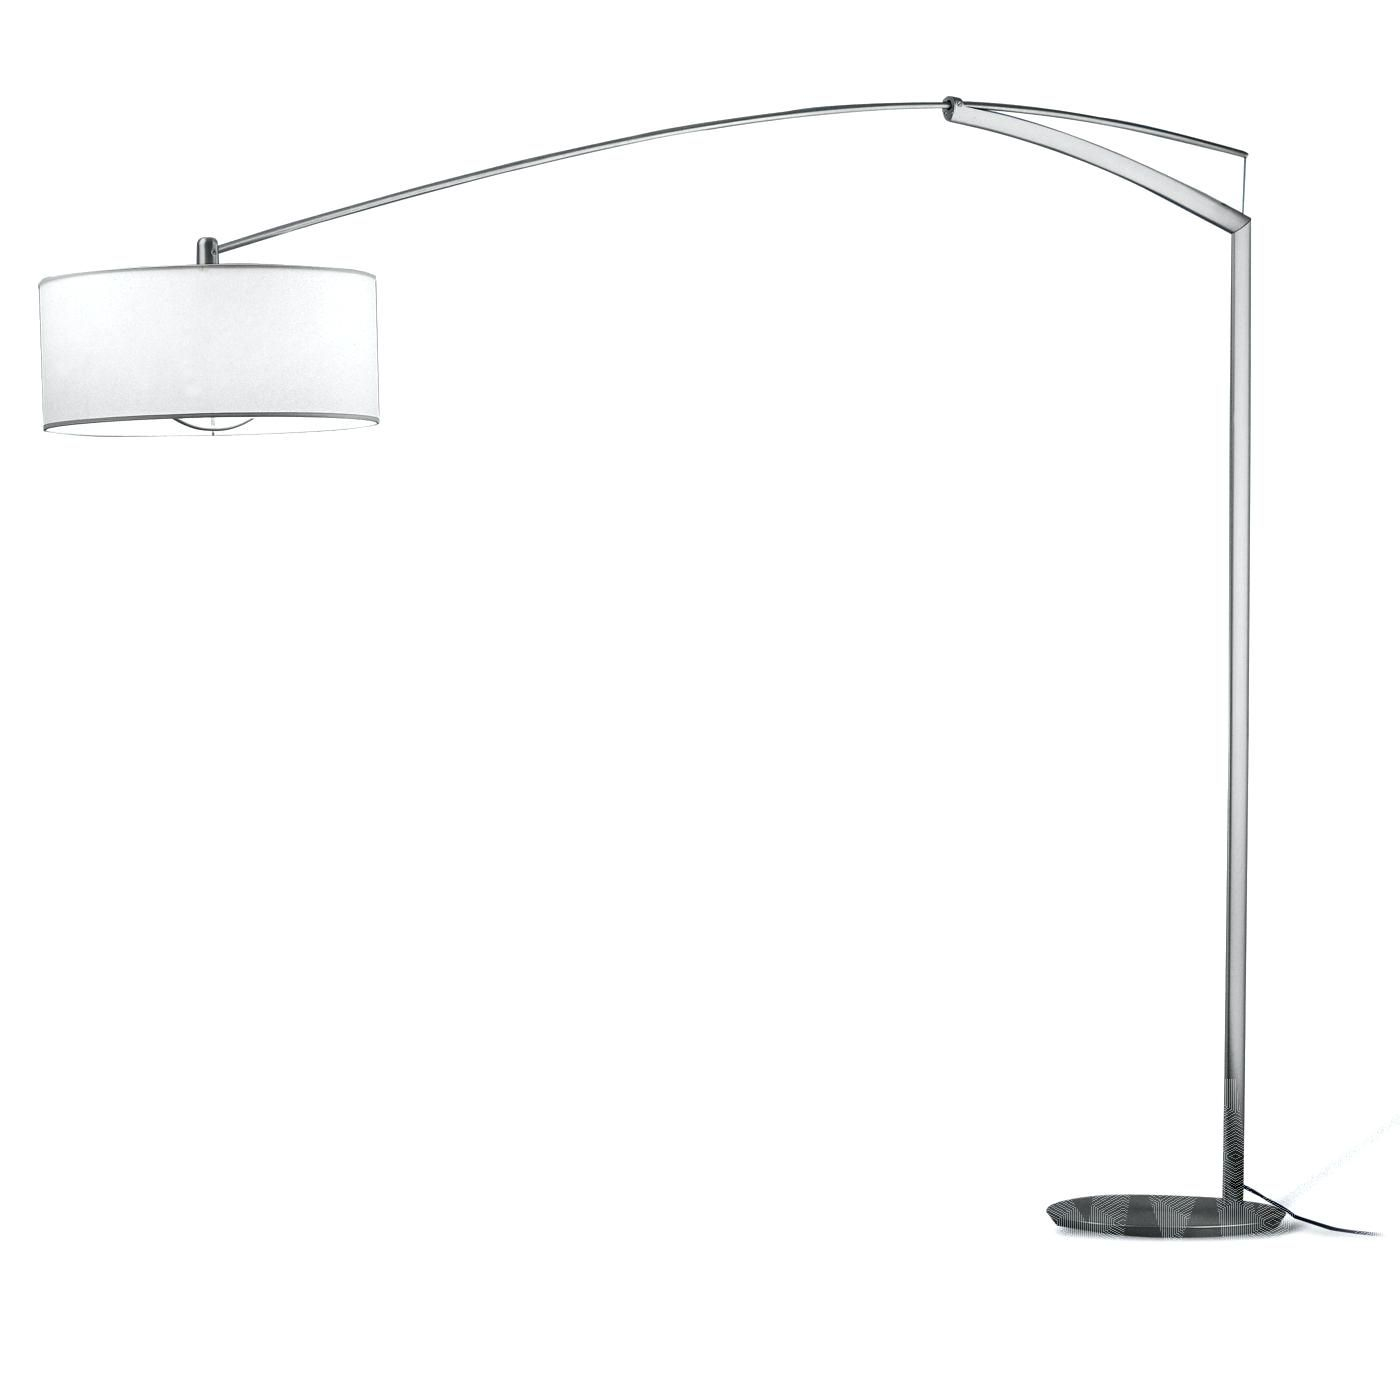 Large Floor Lamps Uk Kai Arc Lamp Grey Shade Interior Decor in dimensions 1400 X 1400